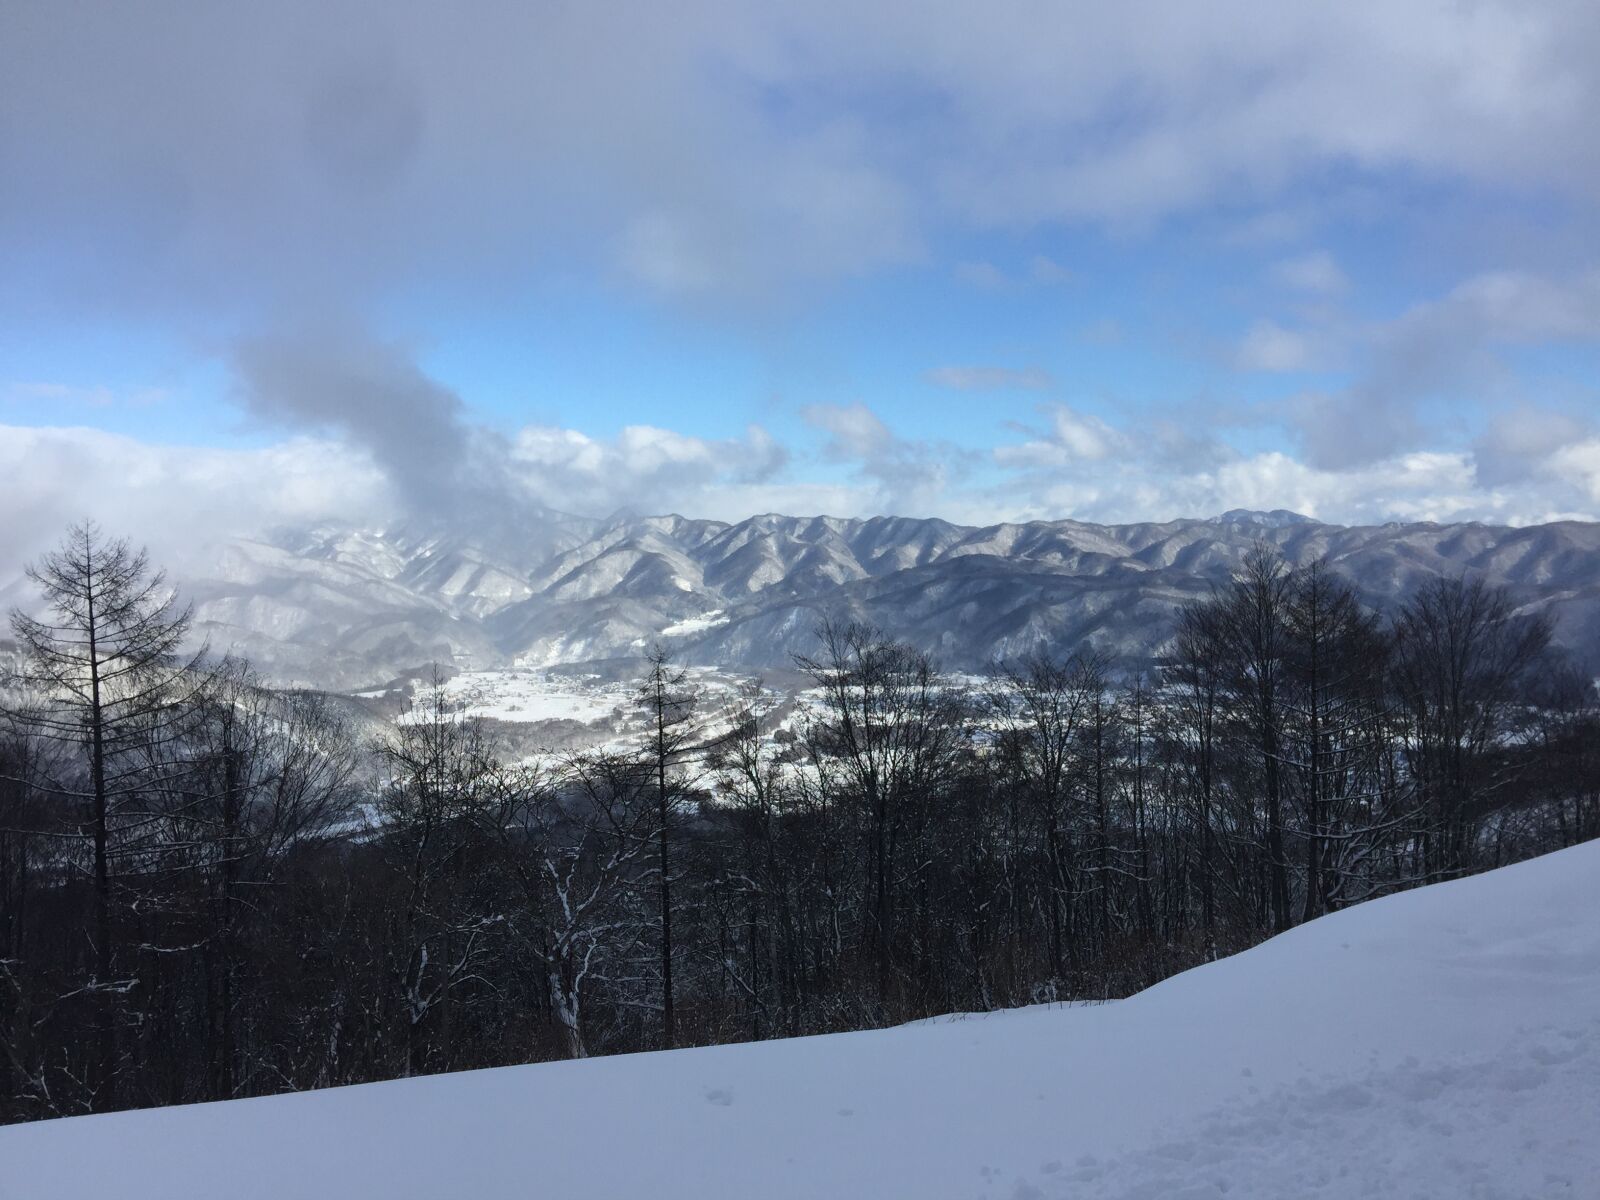 Apple iPhone 6 Plus sample photo. Ski resort, snow, winter photography